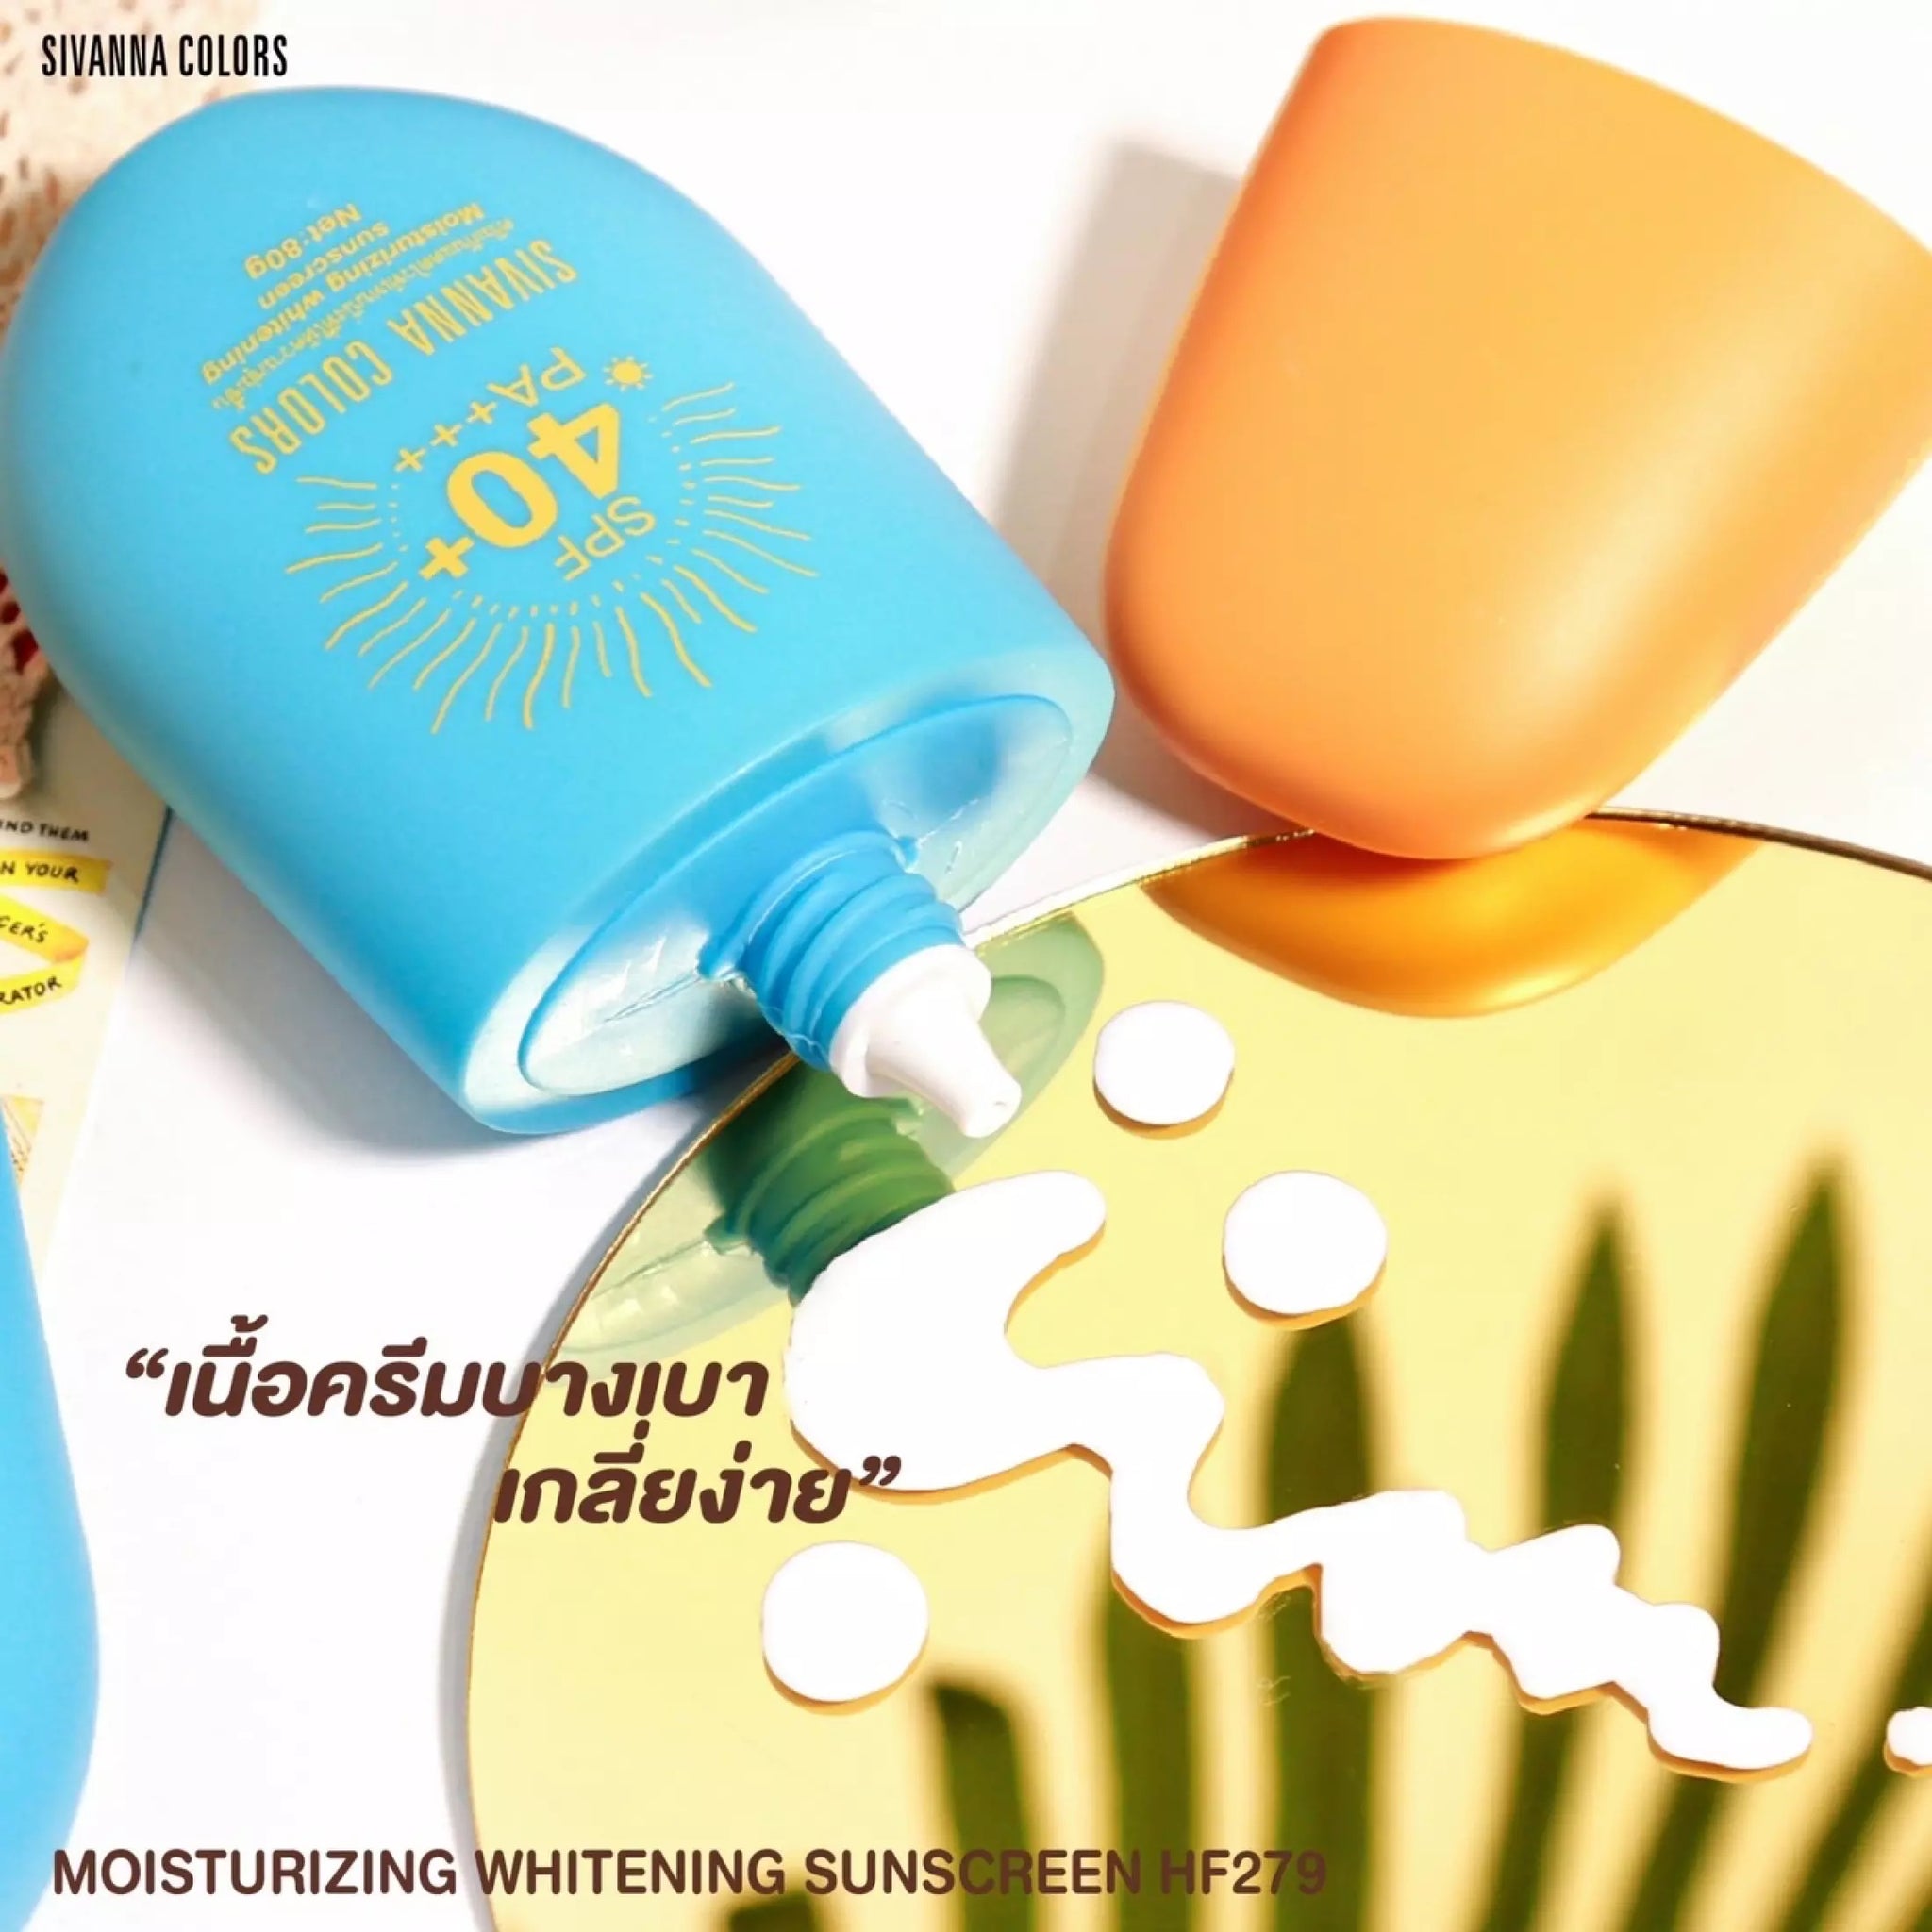 Sivanna Moisturizing Whitening Sunscreen spf40+ pa+++ #HF279 : ซิวานน่า มอยซ์เจอร์ไรซิ่ง ครีมกันแดด